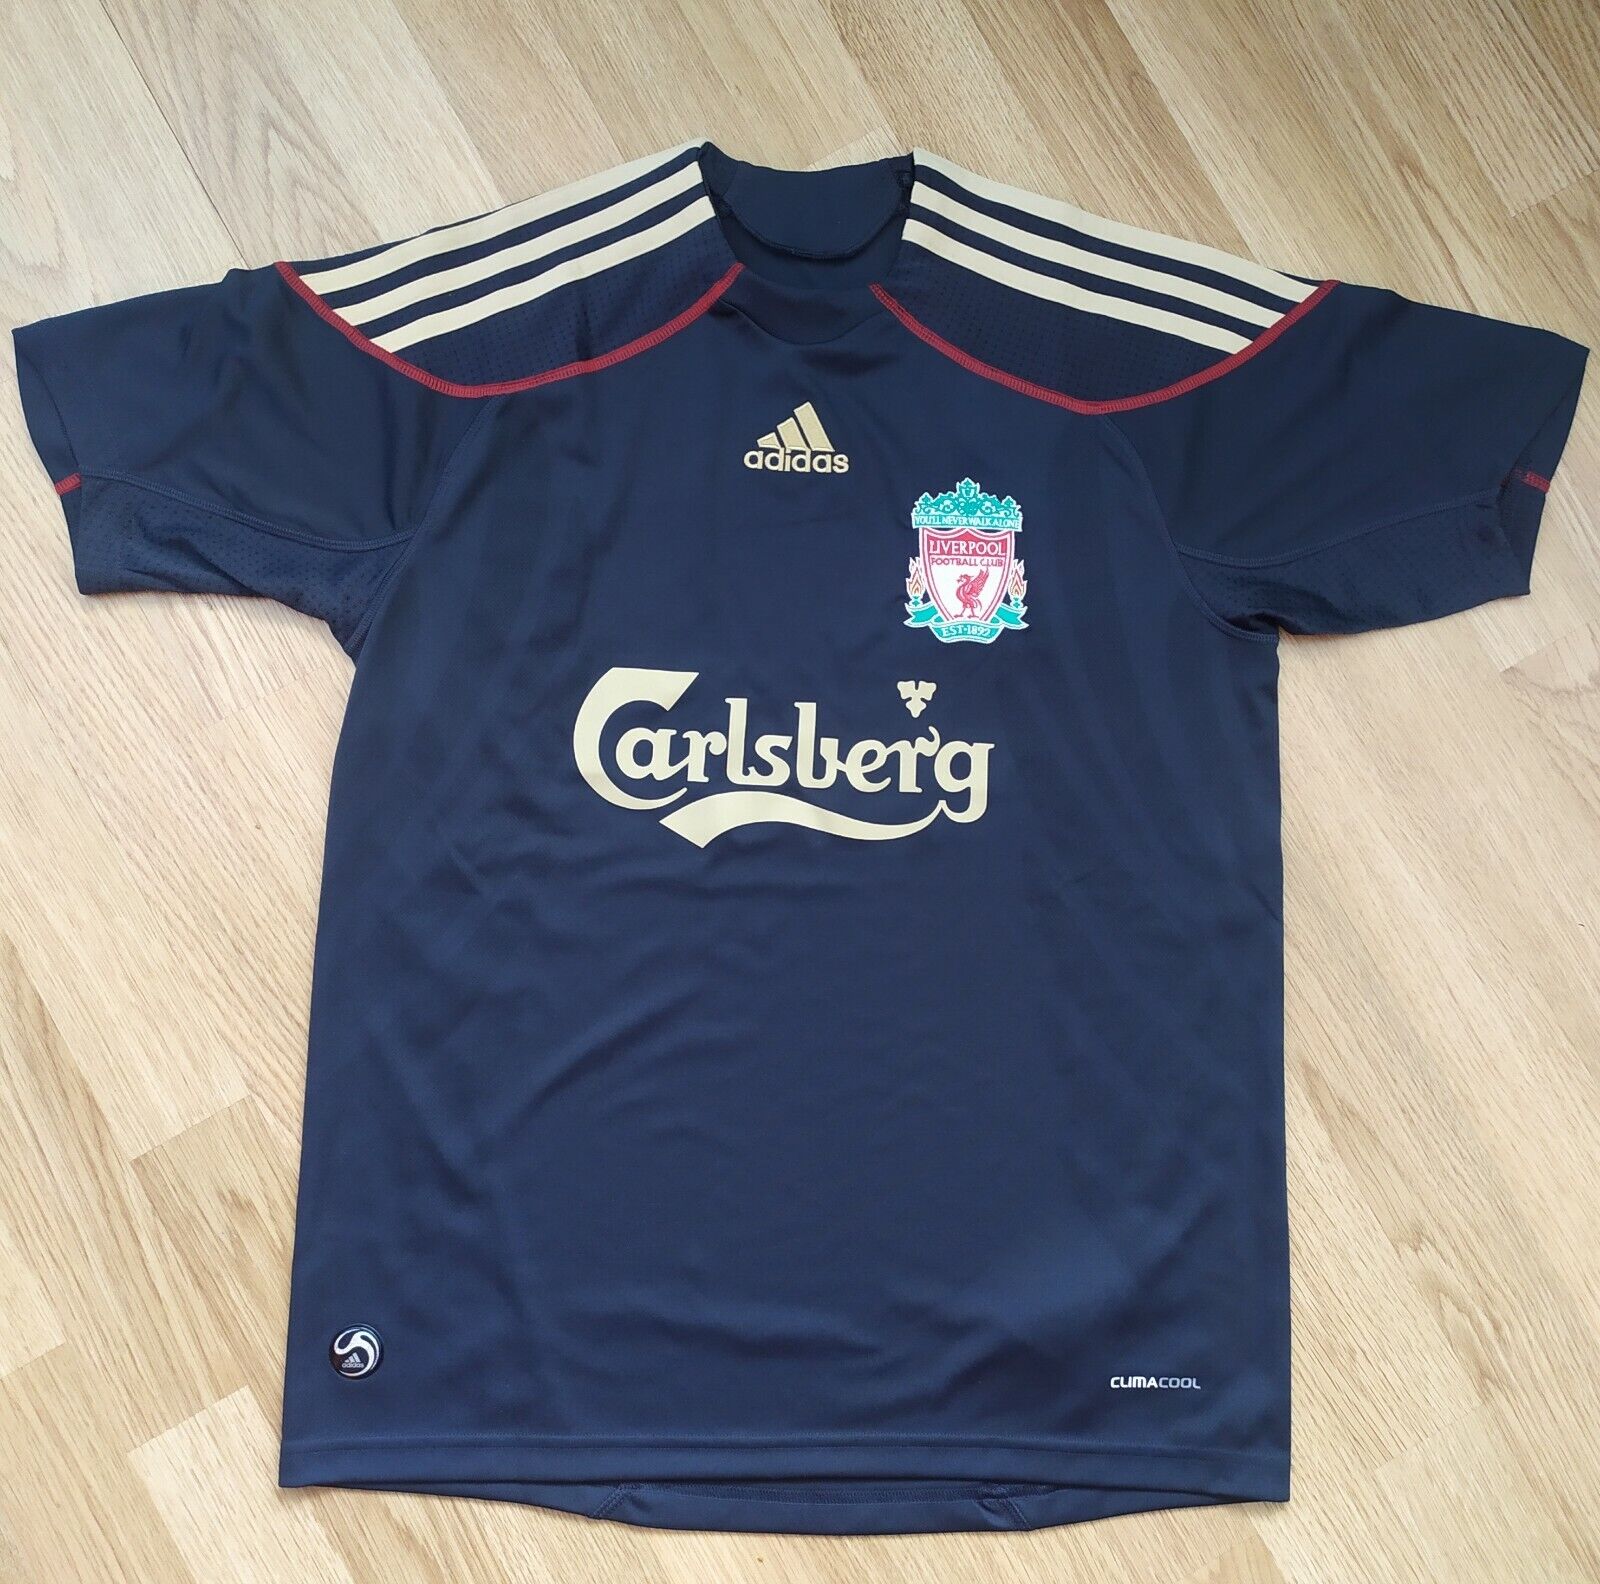 Adidas Liverpool 2009-10 Away Football Jersey Top Black Shirt Japan's largest assortment Free Shipping Cheap Bargain Gift Re